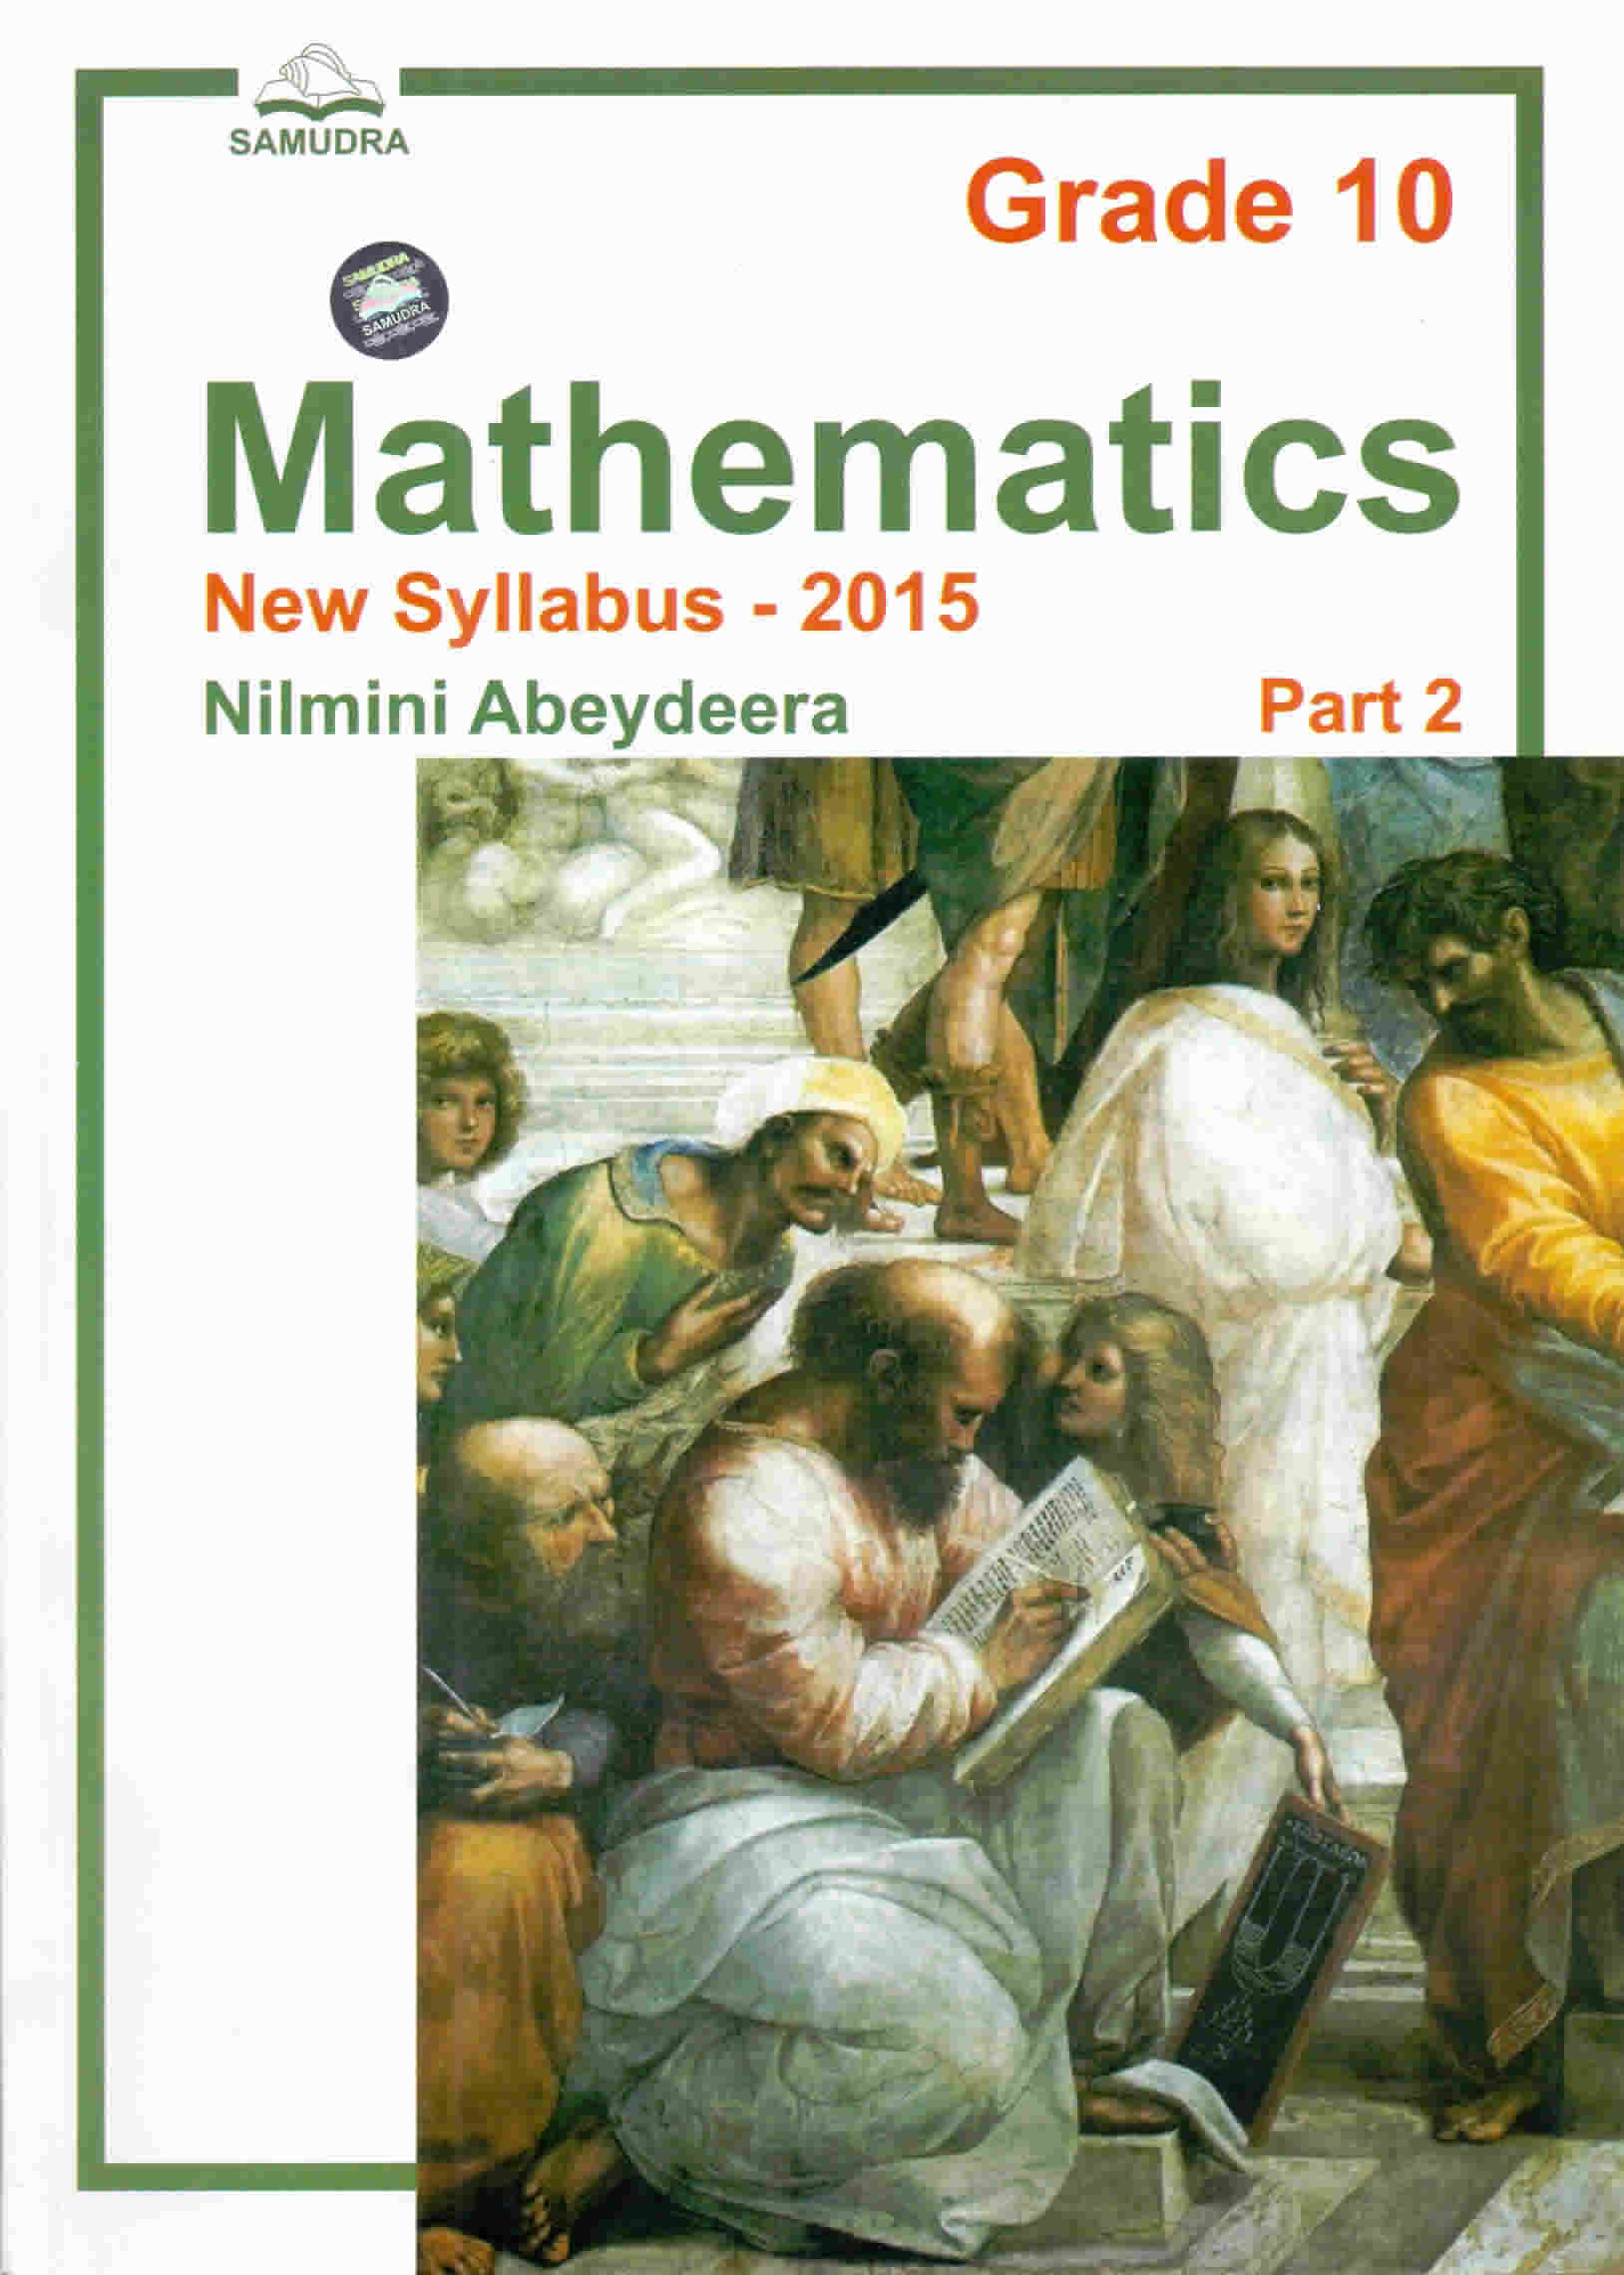 Mathematics New Syllabus 2015 - Grade 10 Part II 